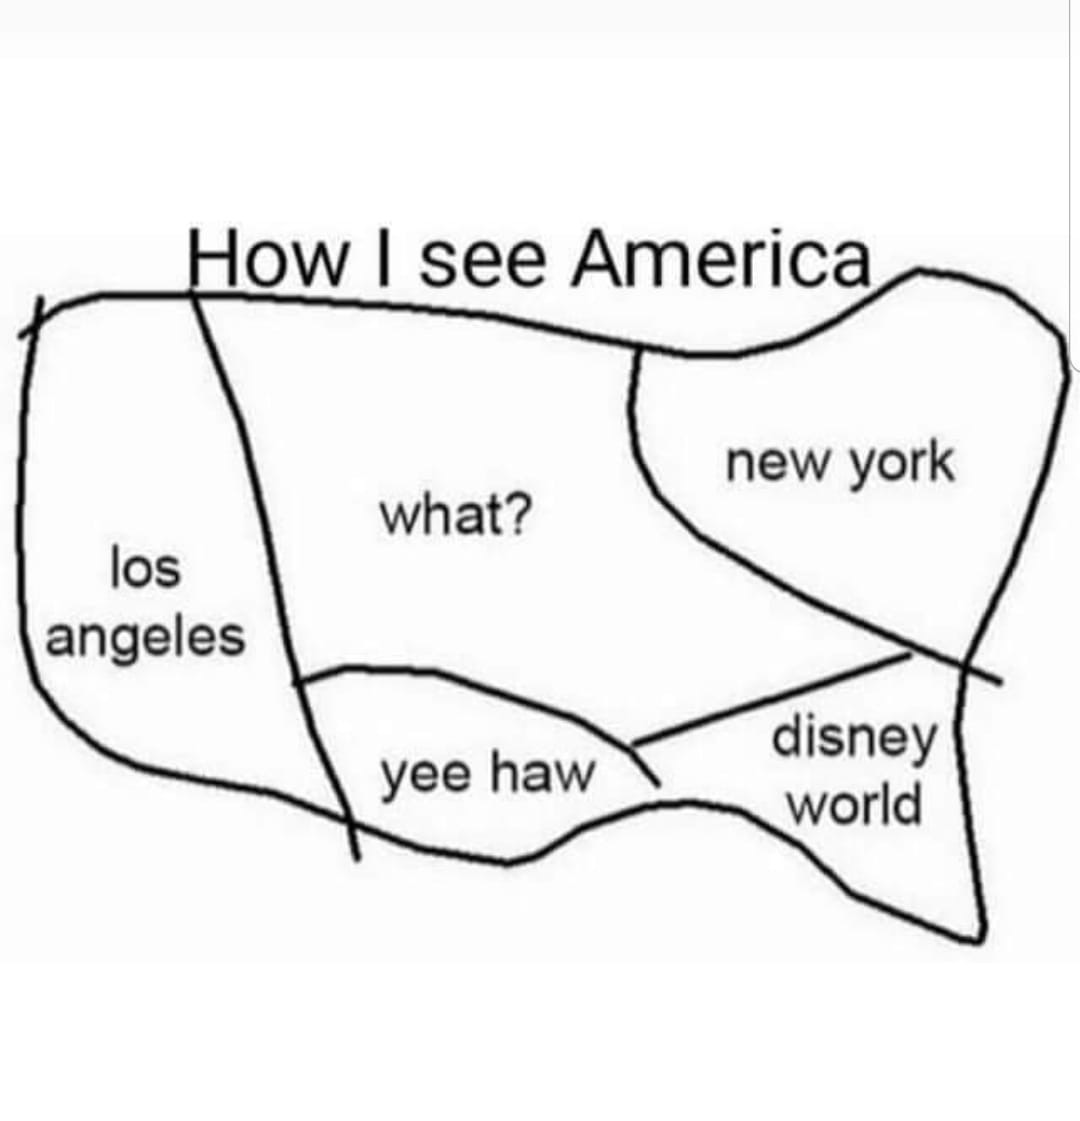 diagram - How I see America new york what? los angeles yee haw disney world